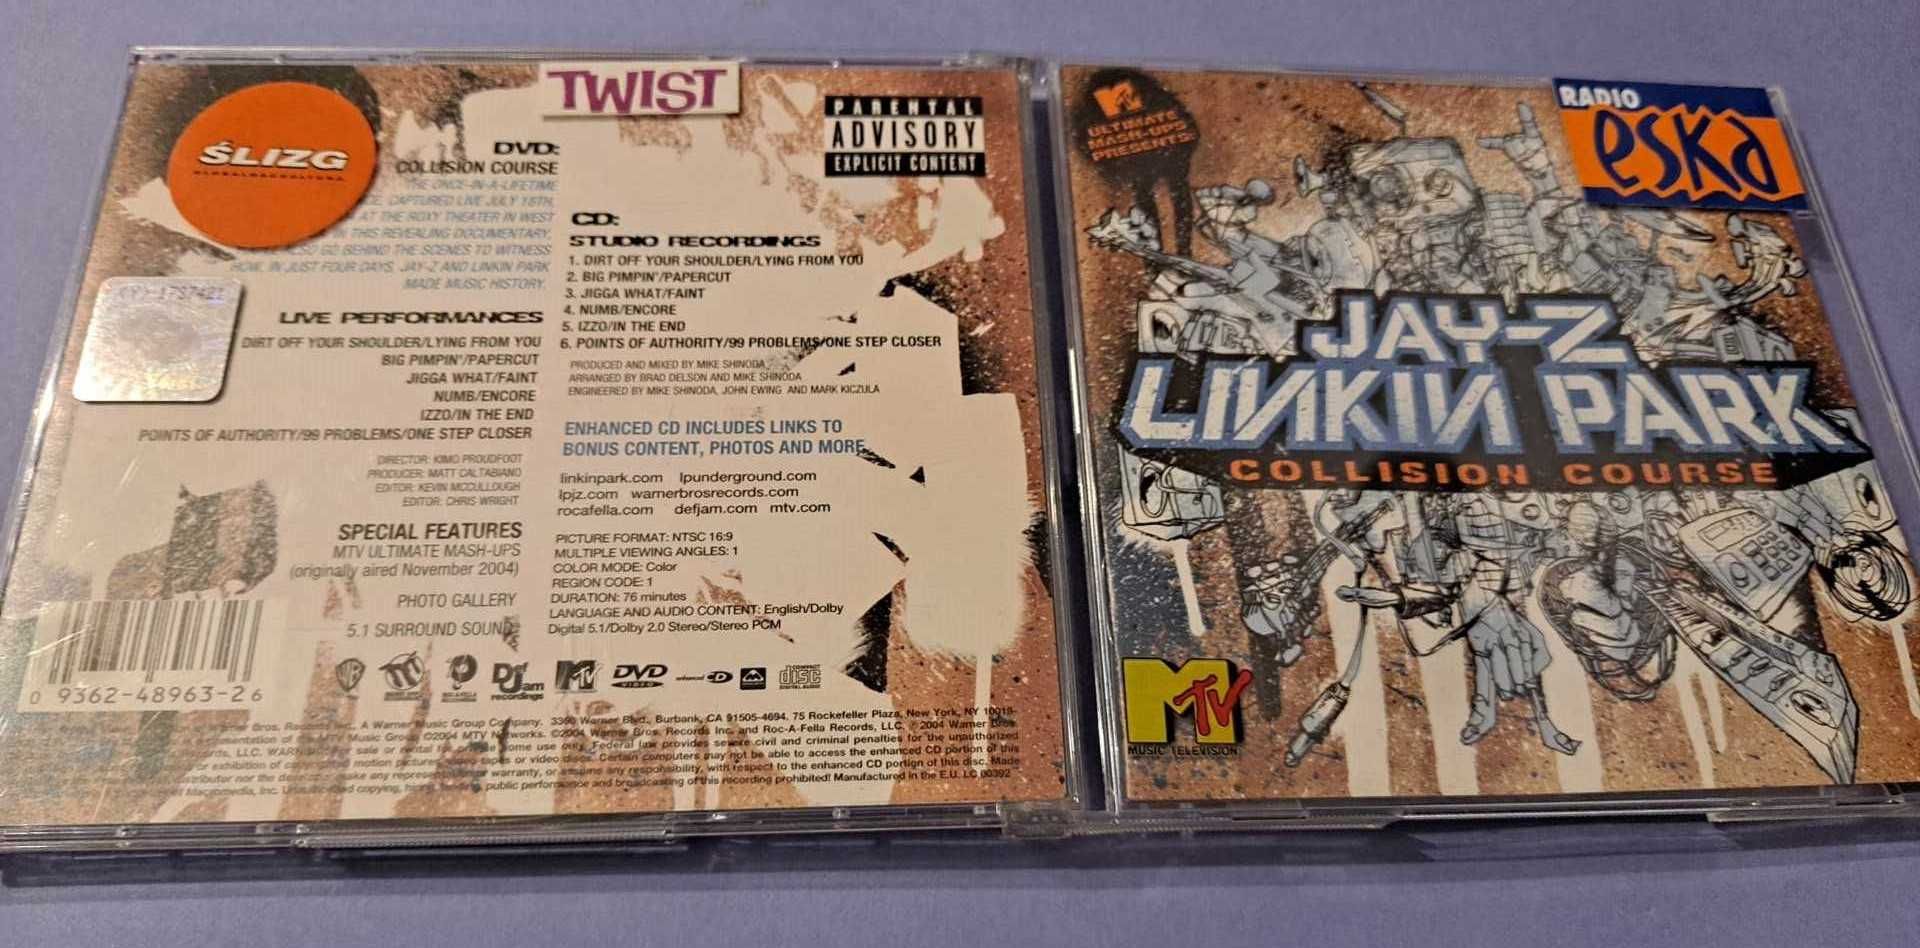 Jay-Z / Linkin Park – Collision Course 2004 CD plus DVD